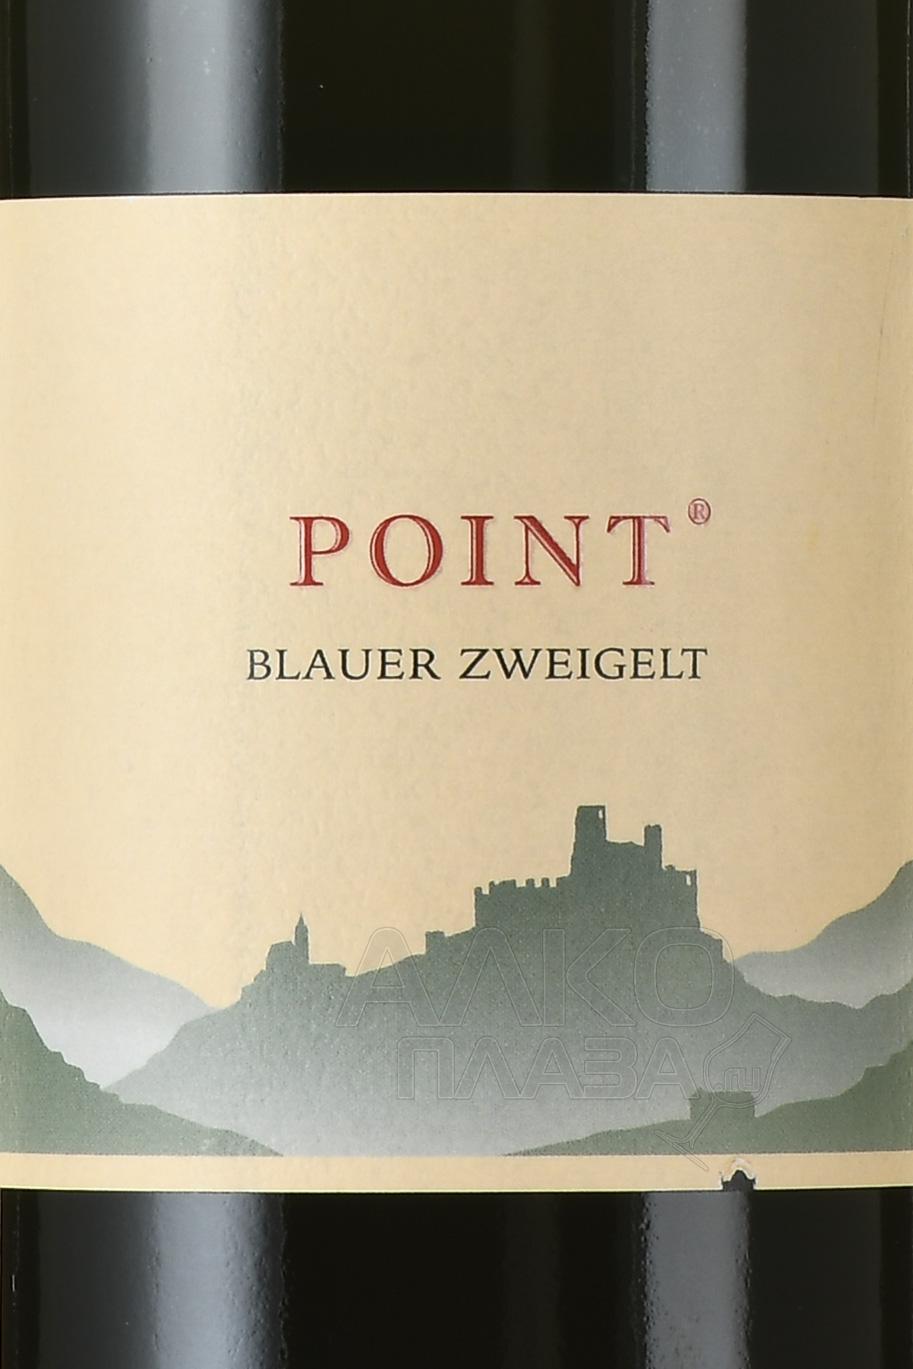 Blauer Zweigelt вино. Блауэр вино Цвайгельт красное. Австрийское вино Цвайгельт. Zweigelt вино красное сухое.